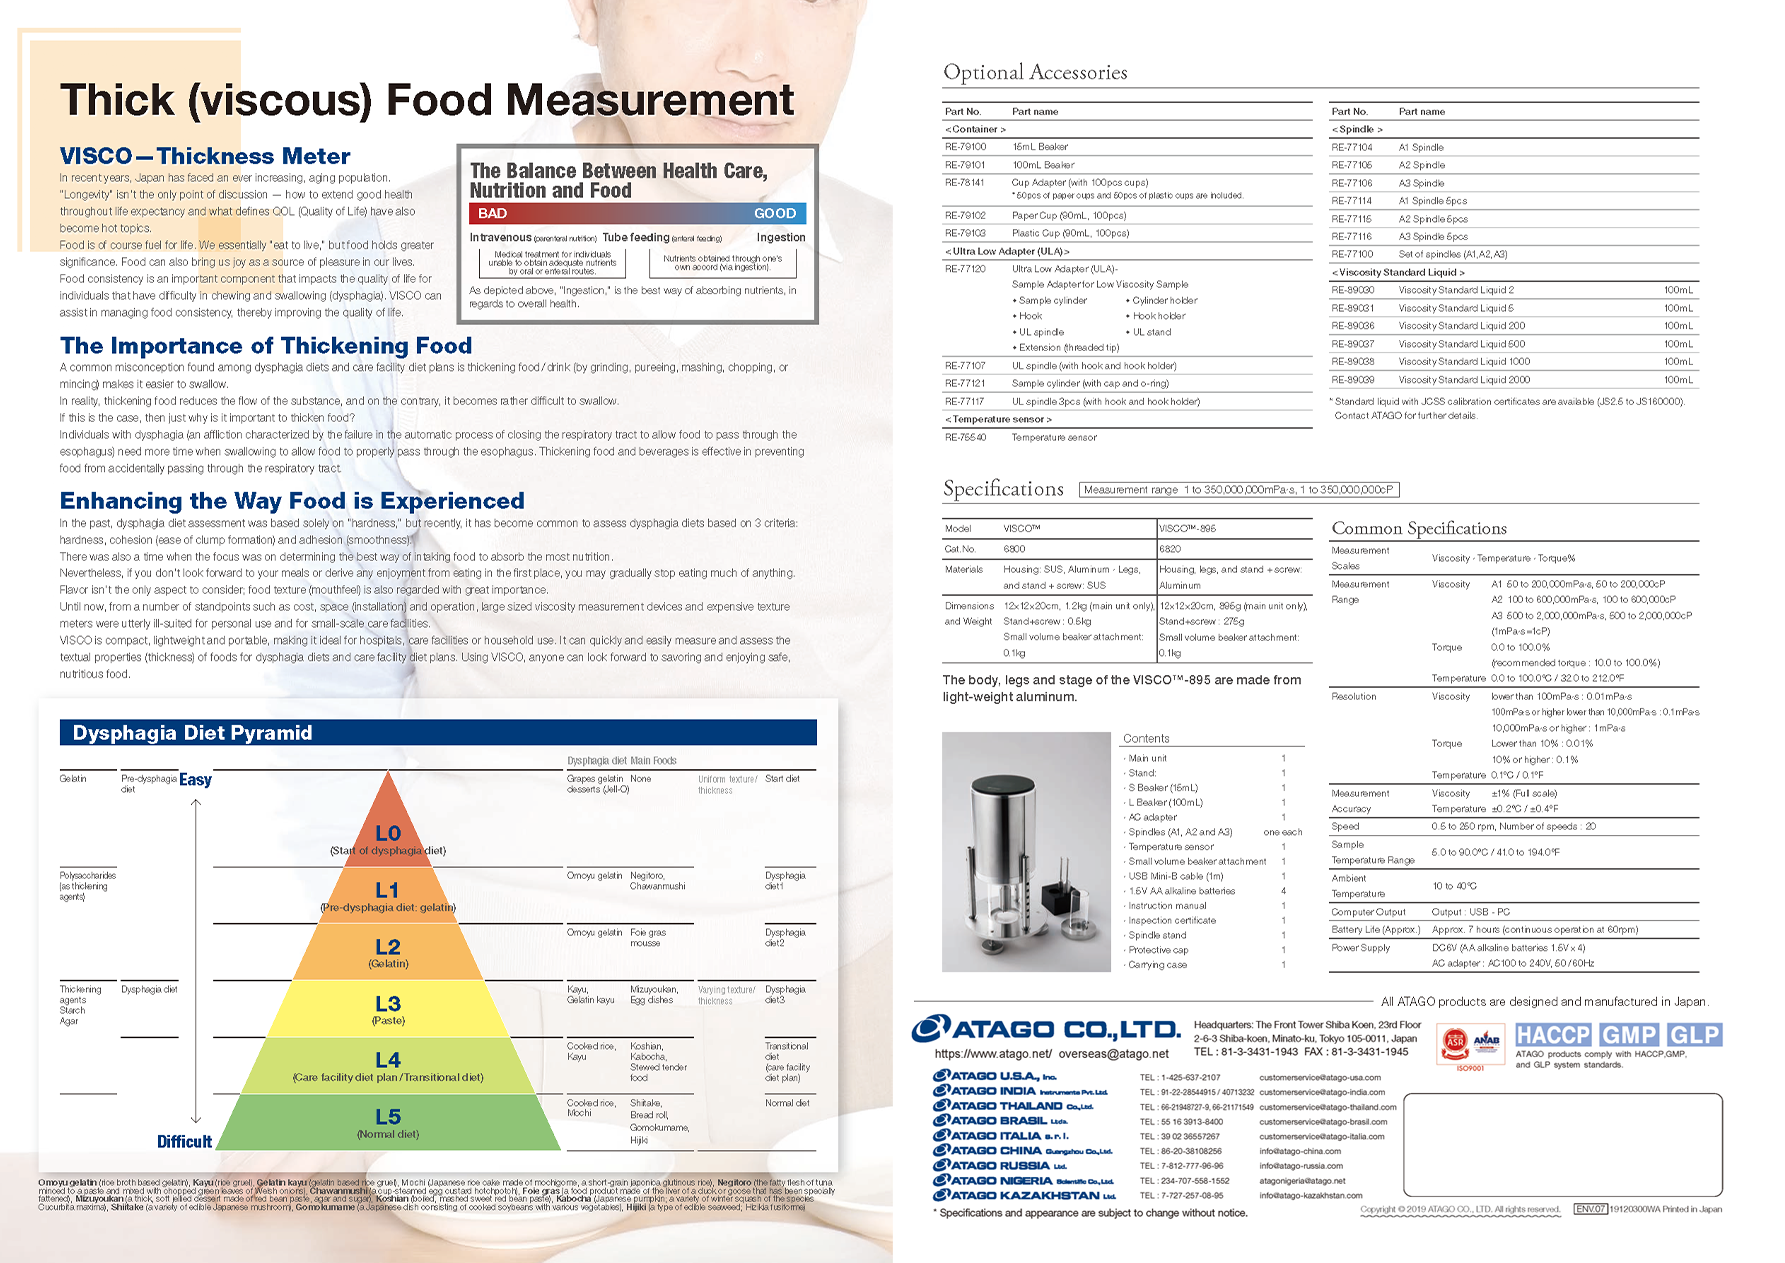 Thick (viscous) Food Measurement / Optional Accessories